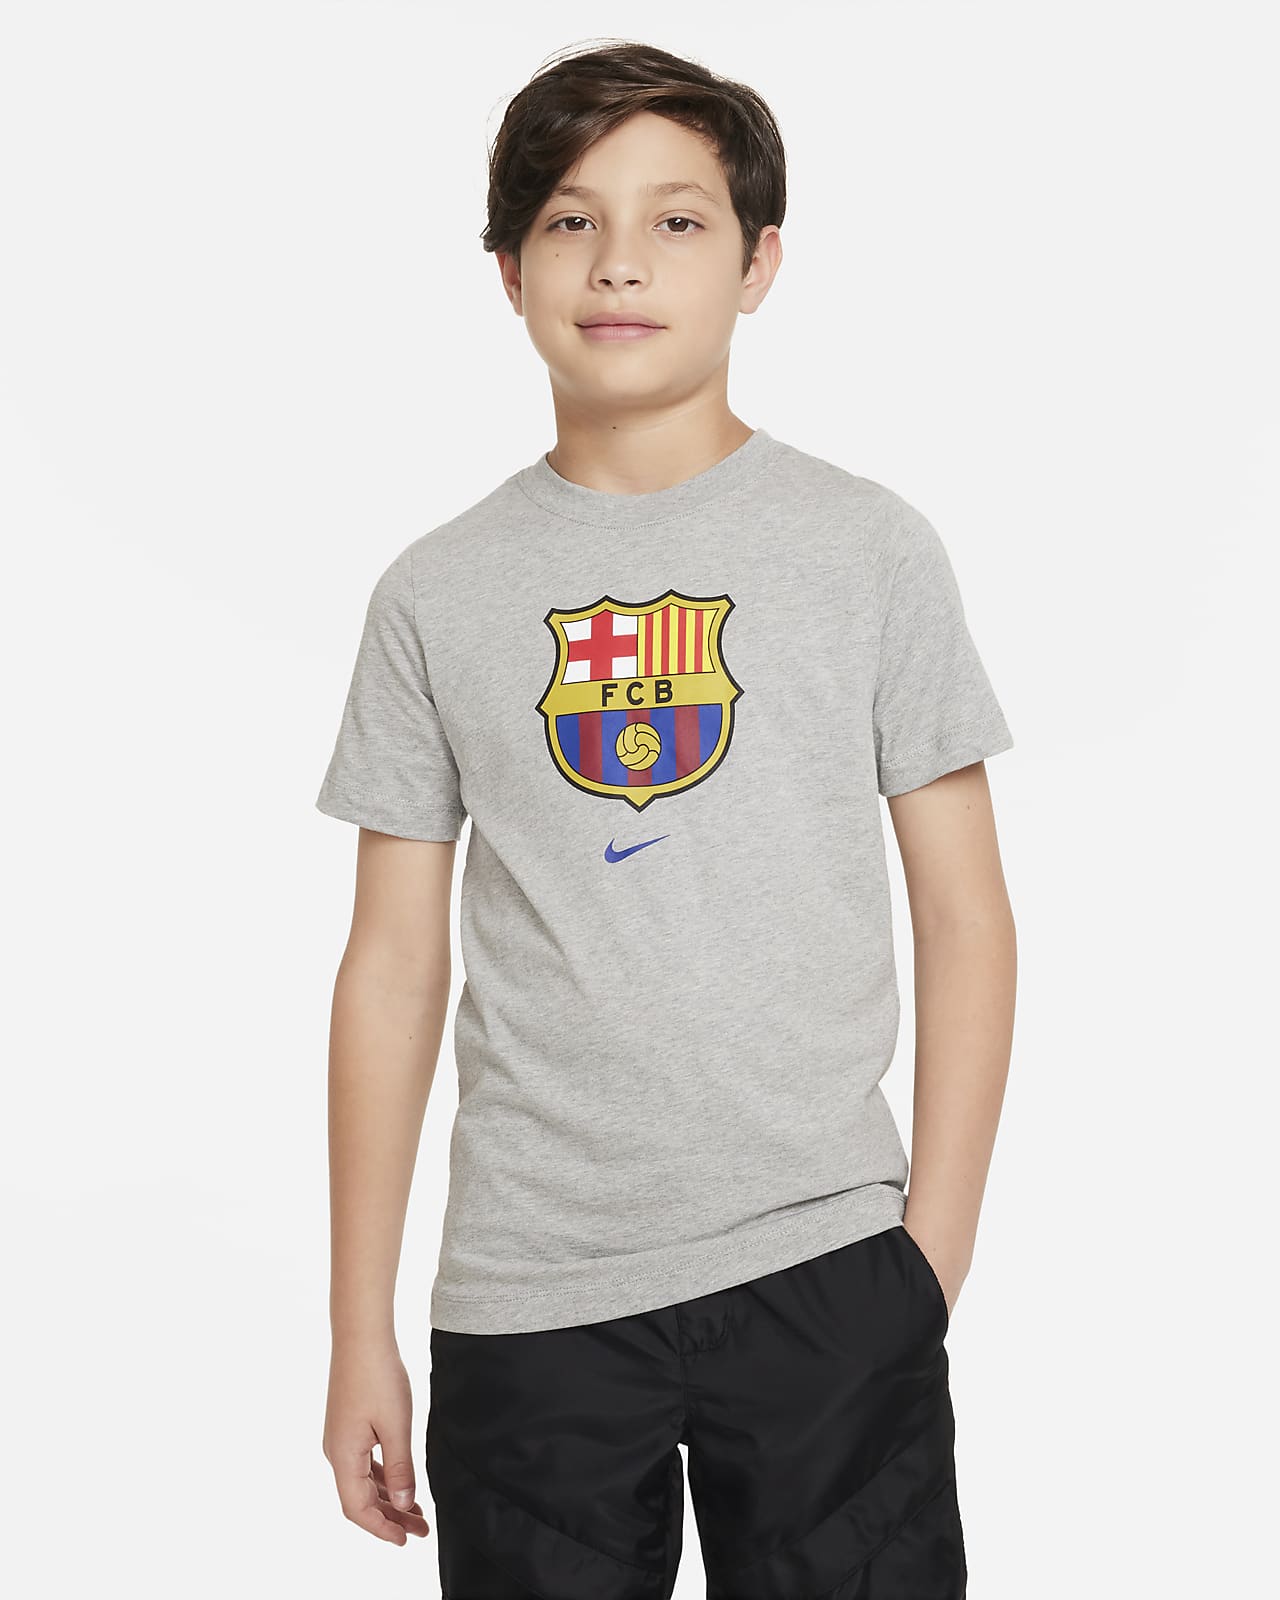 FC Barcelona Crest Big Kids' Nike T-Shirt